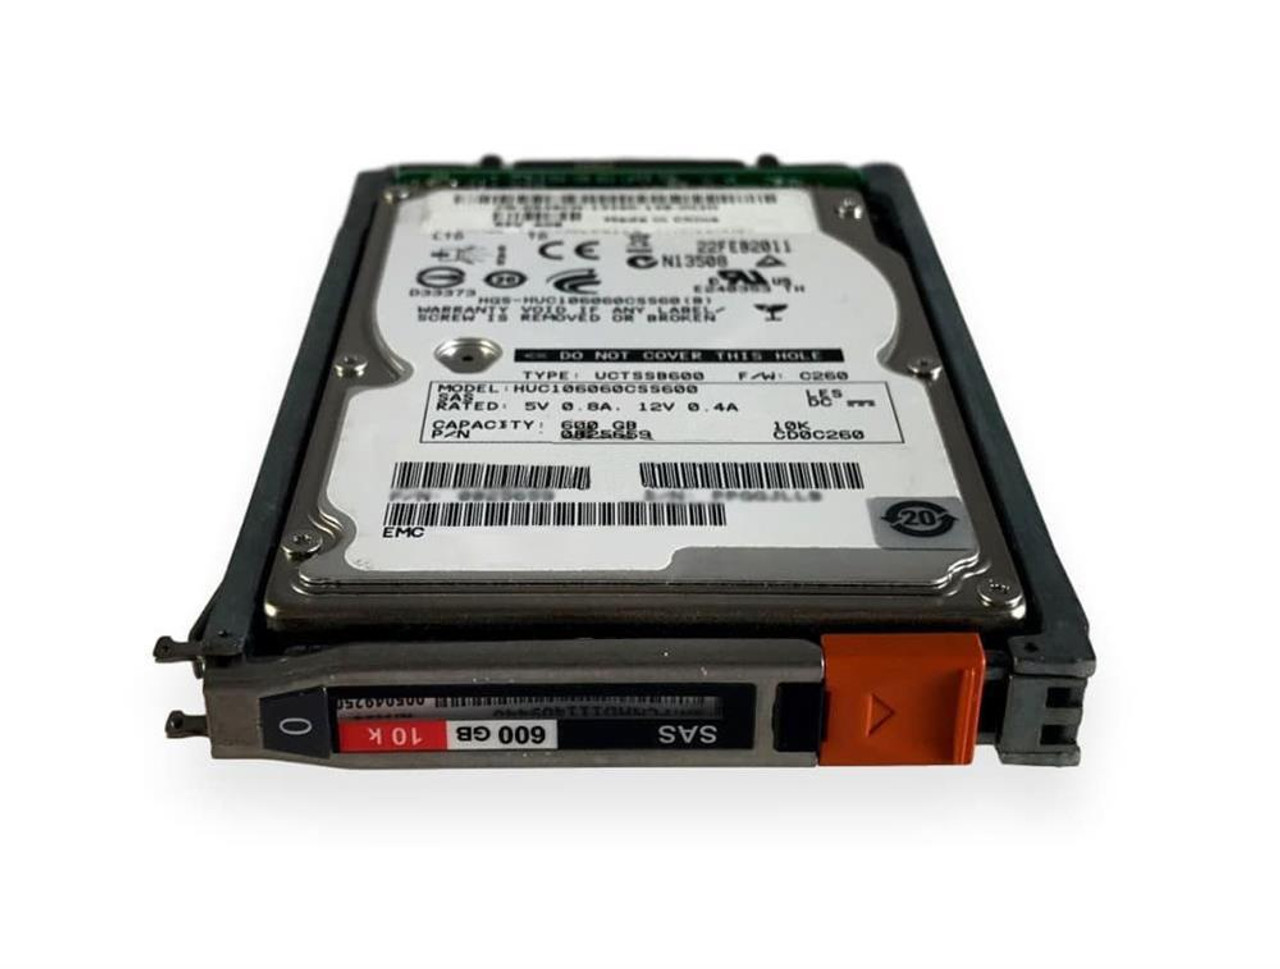 T4-2S10-600 EMC 600GB 10000RPM SAS 12Gbps 2.5-inch Internal Hard Drive for 25 x 2.5 Enclosure